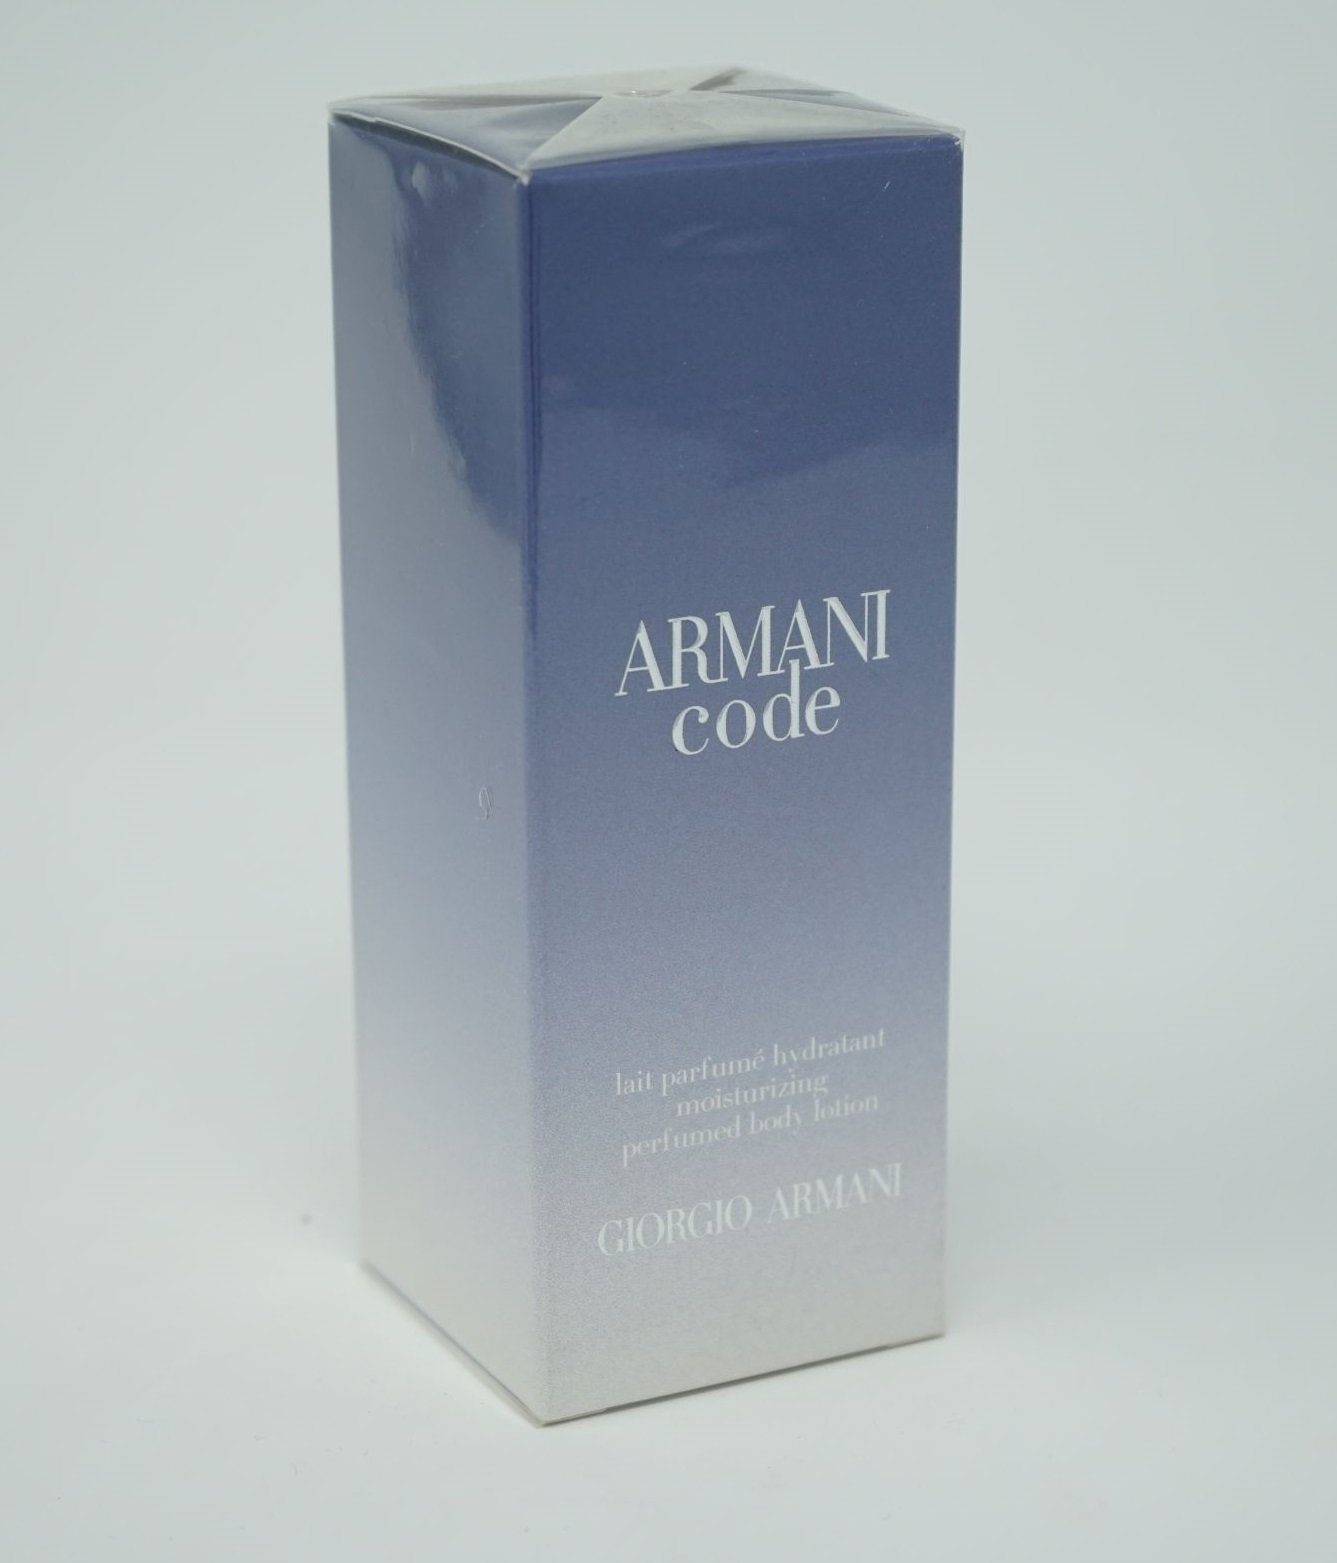 Giorgio Armani Körperpflegeduft Giorgio Armani Code Perfumed Body Lotion  200ml